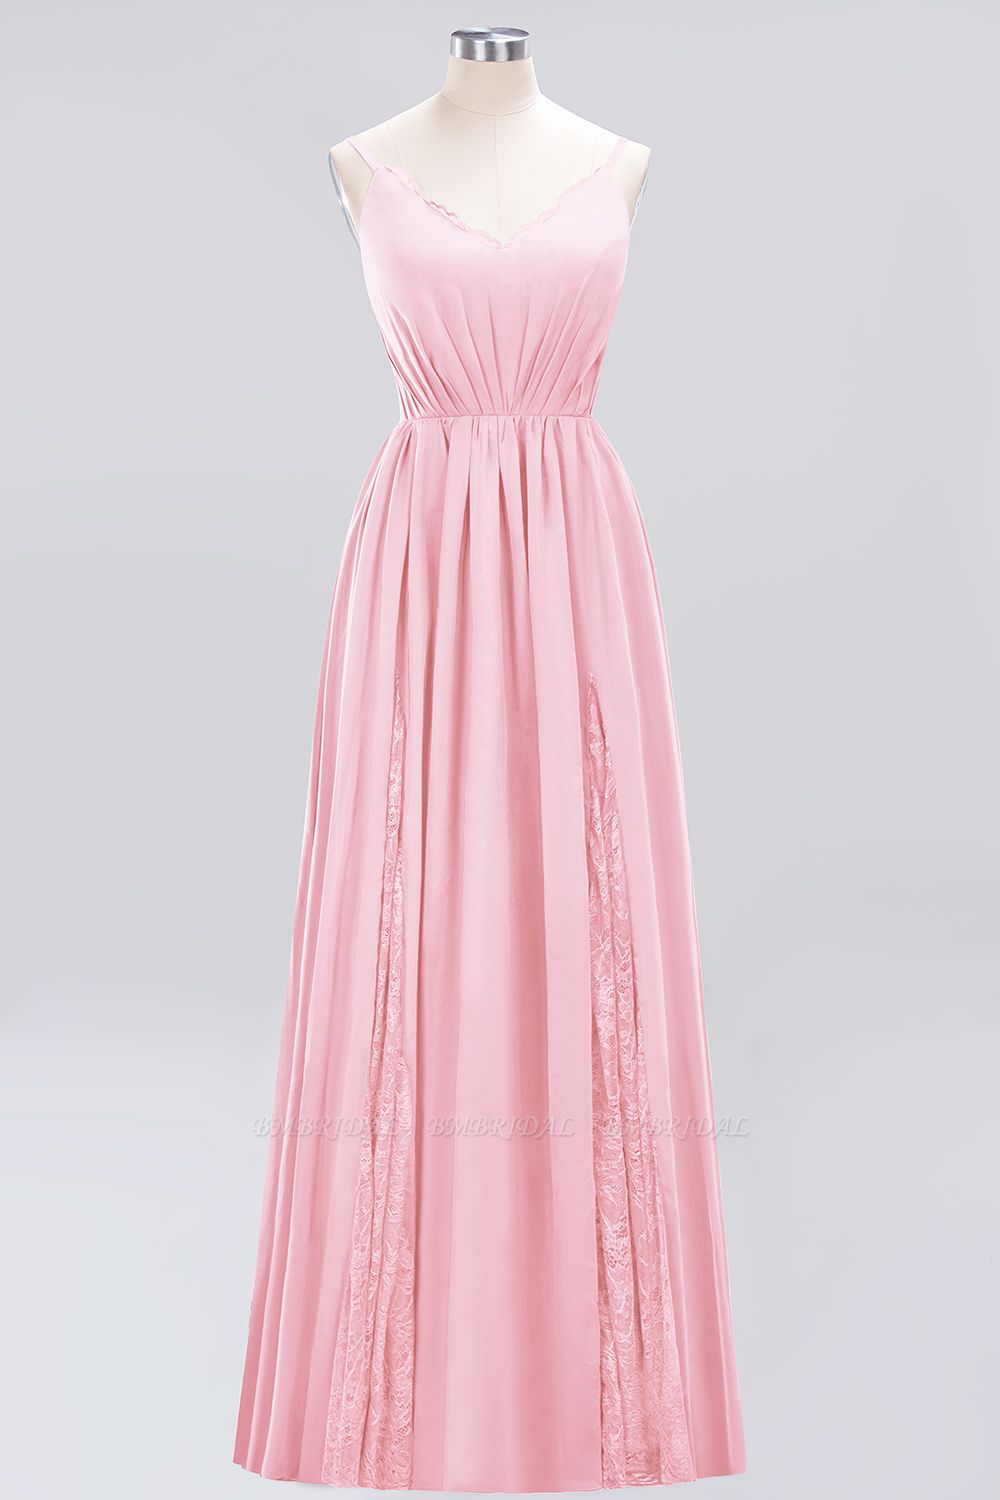 BMbridal Elegant Spaghetti Straps Long Bridesmaid Dress Lace V-Neck Maid of Honor Dress